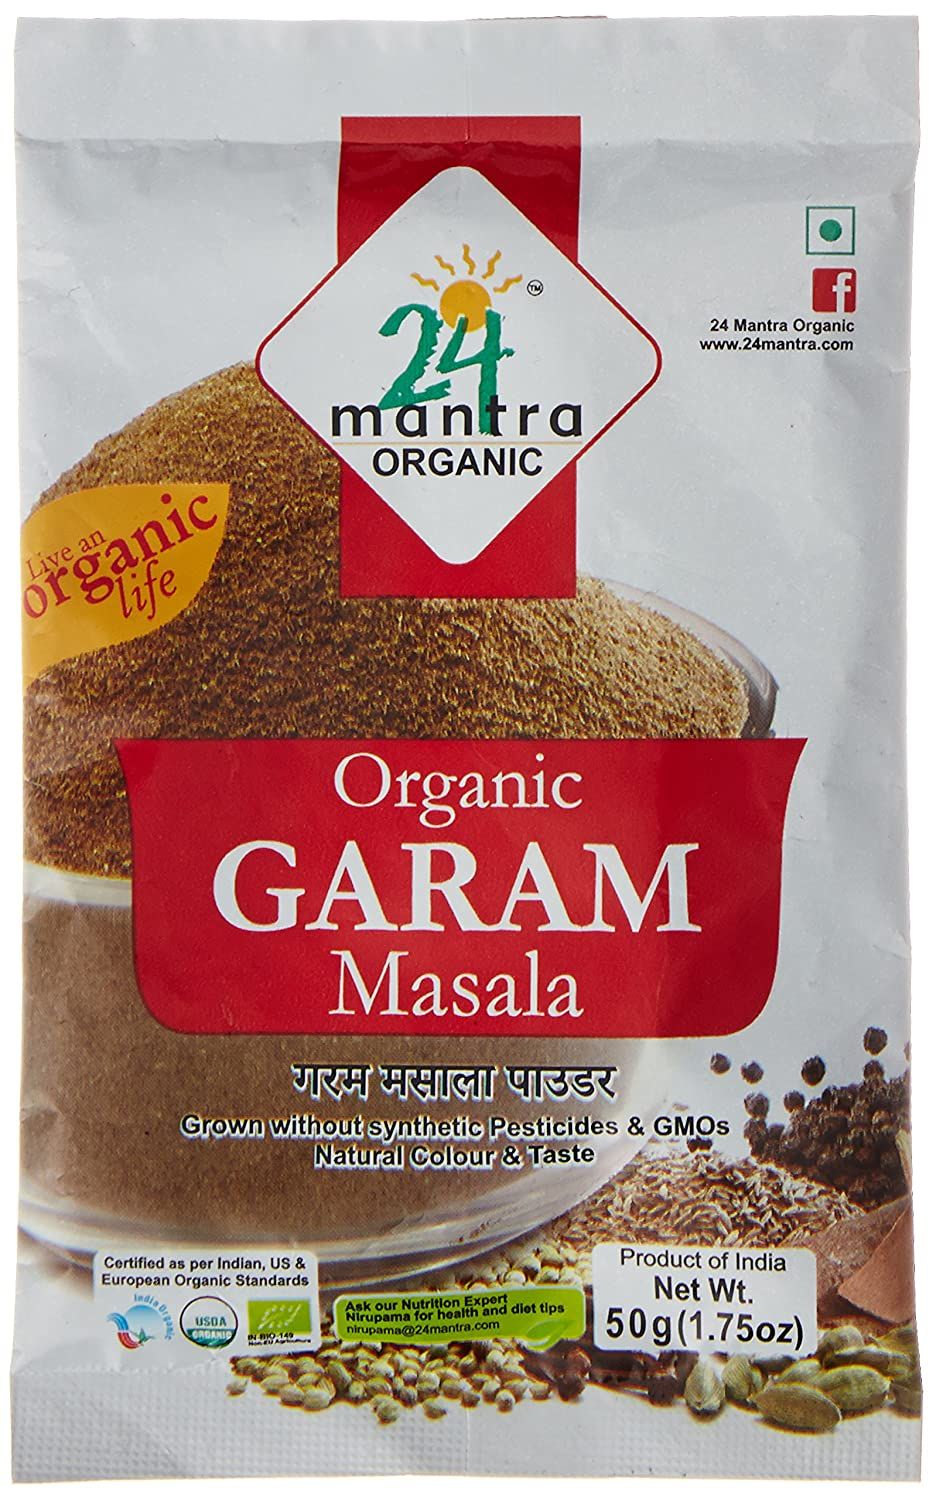 24 Mantra Organic Garam Masala Image